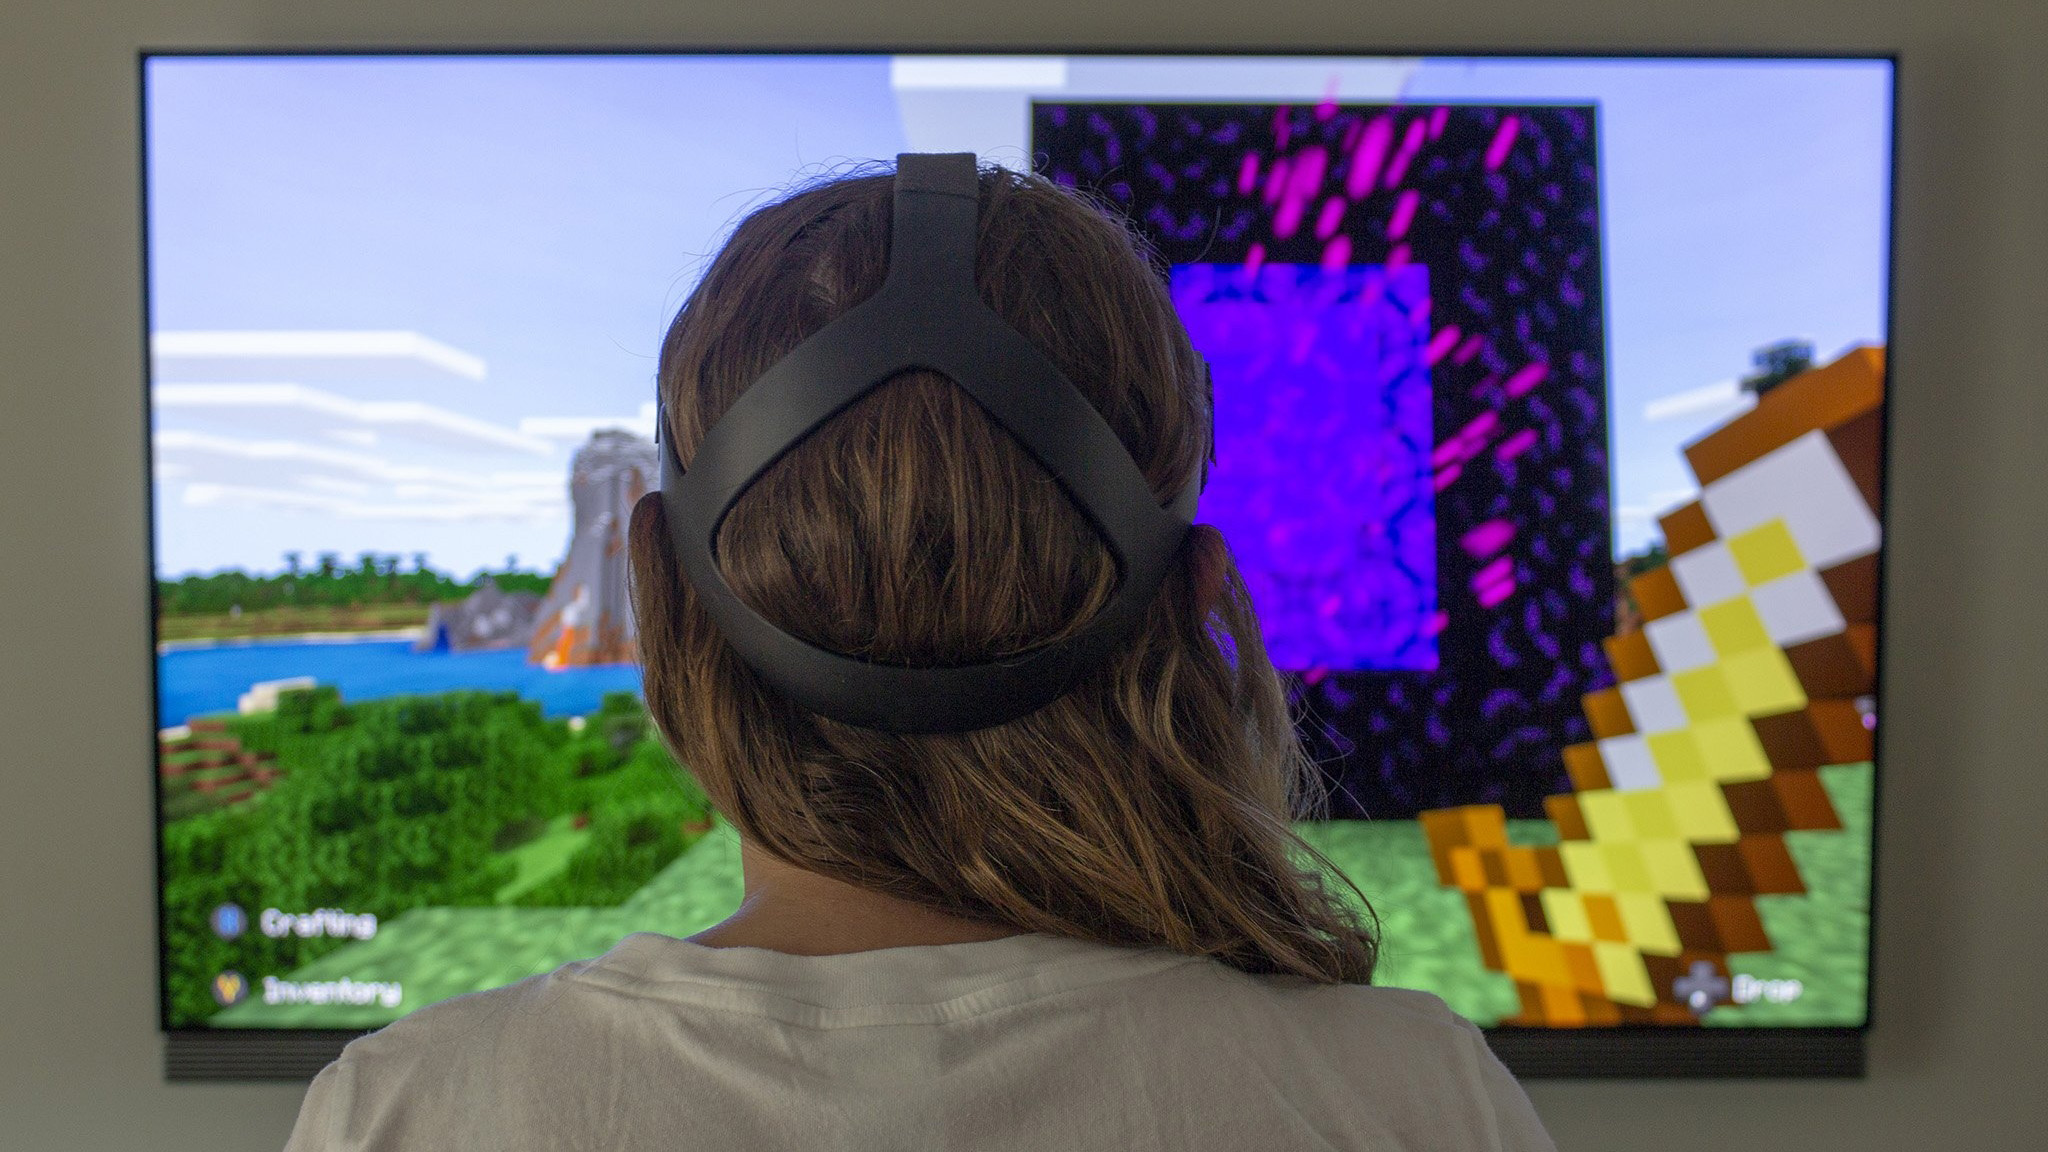 Play Minecraft VR on an original Oculus Quest